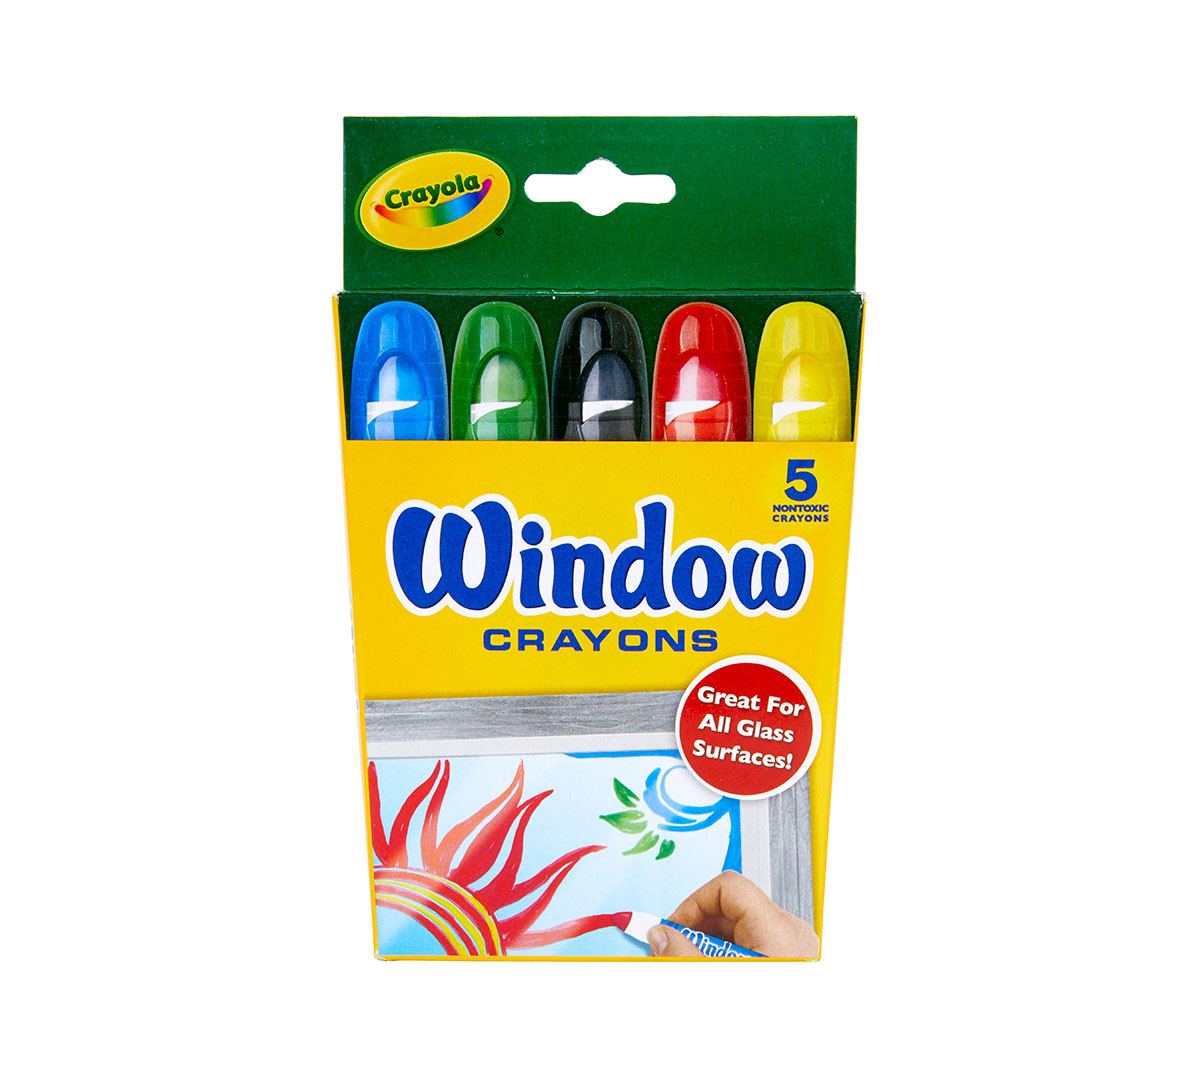 Window Crayons, Crayola.com